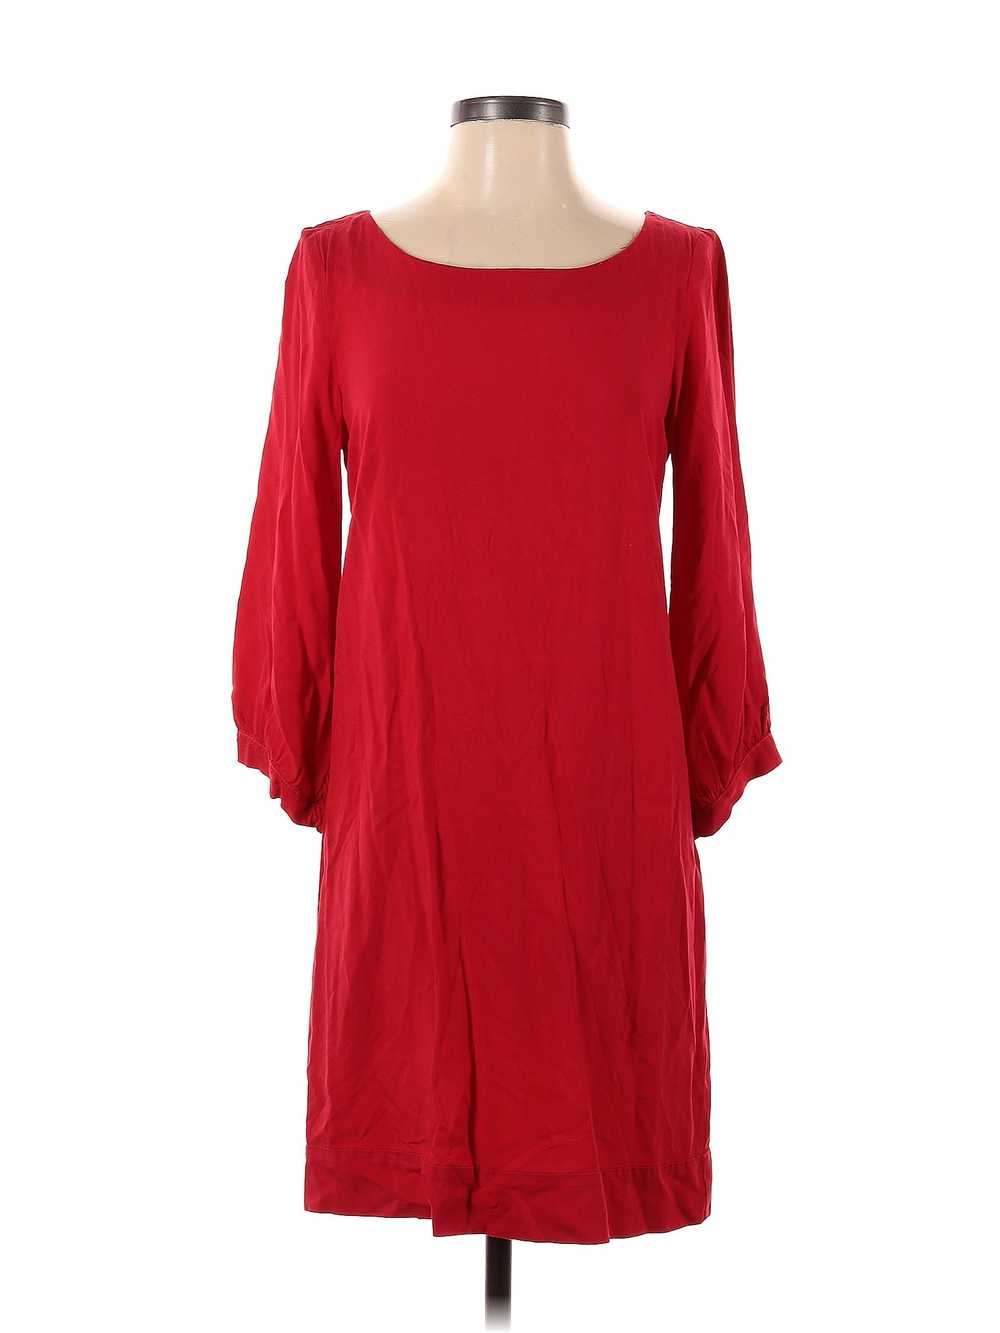 Splendid Women Red Casual Dress S - image 1